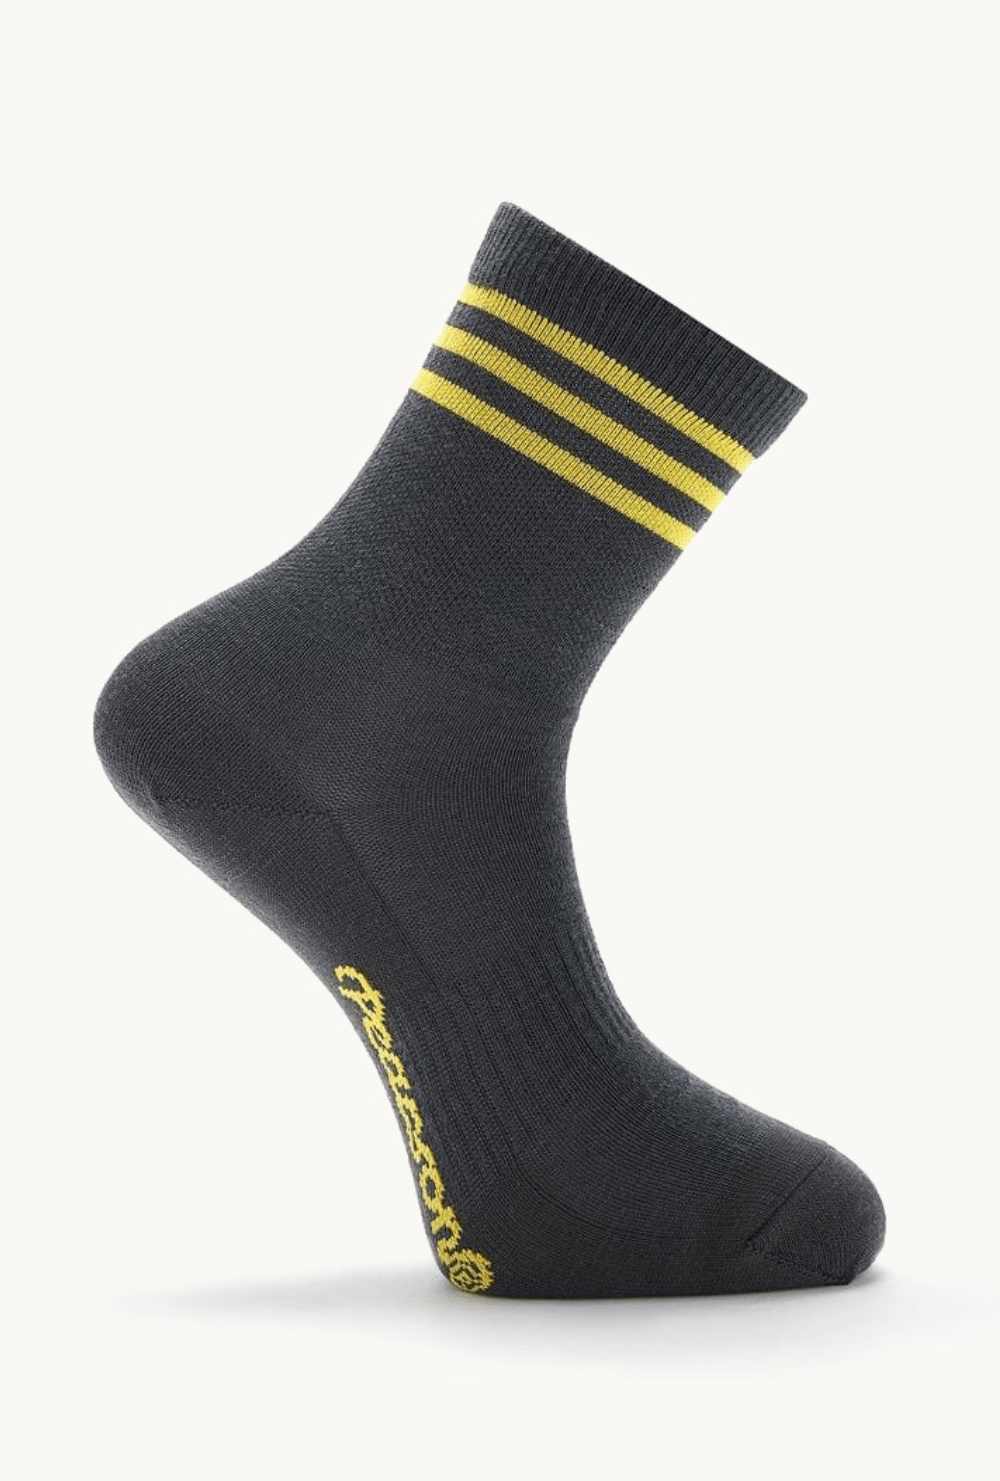 Pearson 1860  Reasons To Be Cheerful - Merino Socks  Small / Medium